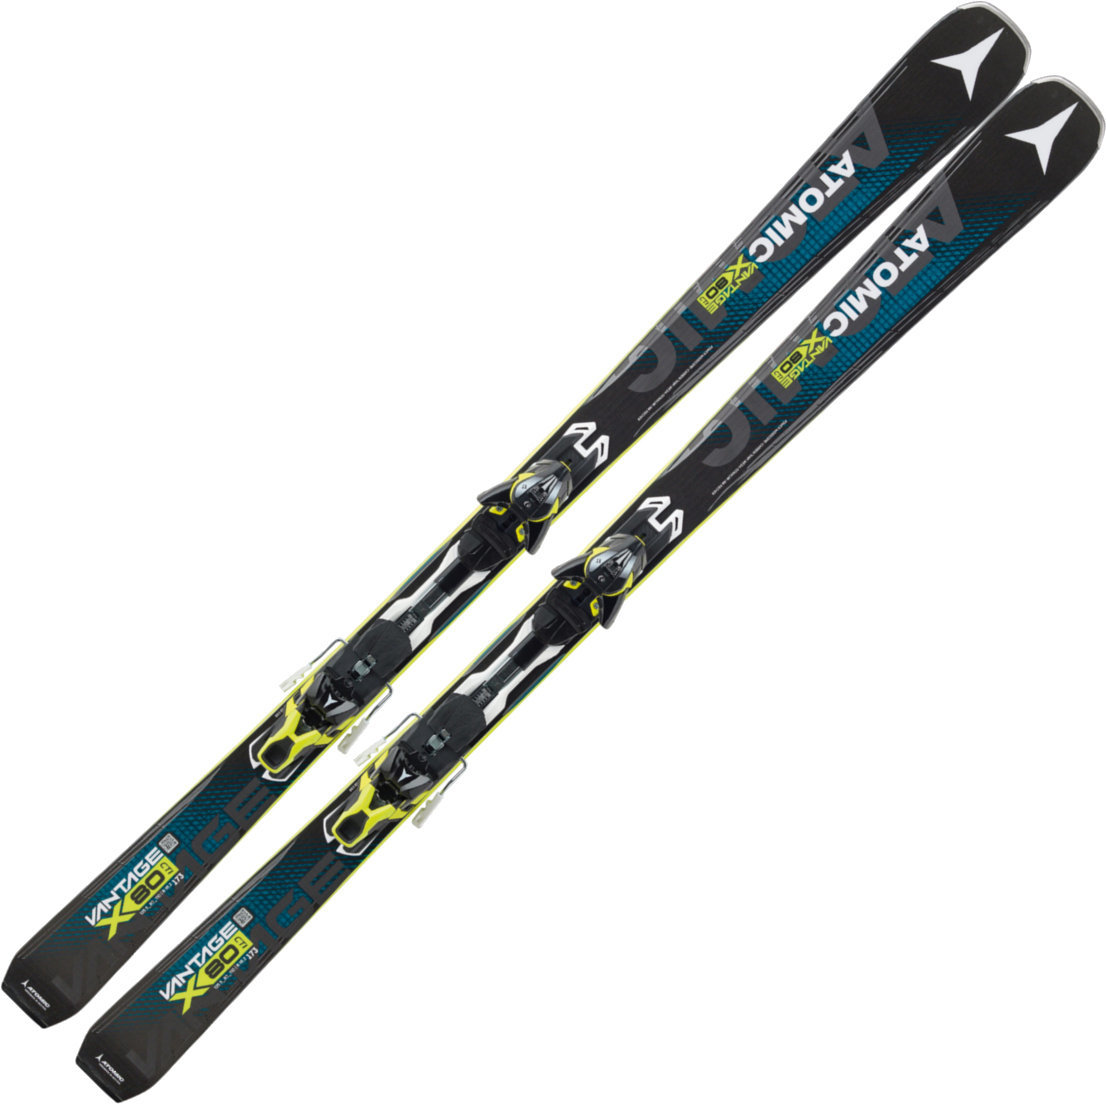 Esquís Atomic Vantage X 80 CTI + XT 12 159 cm 17/18